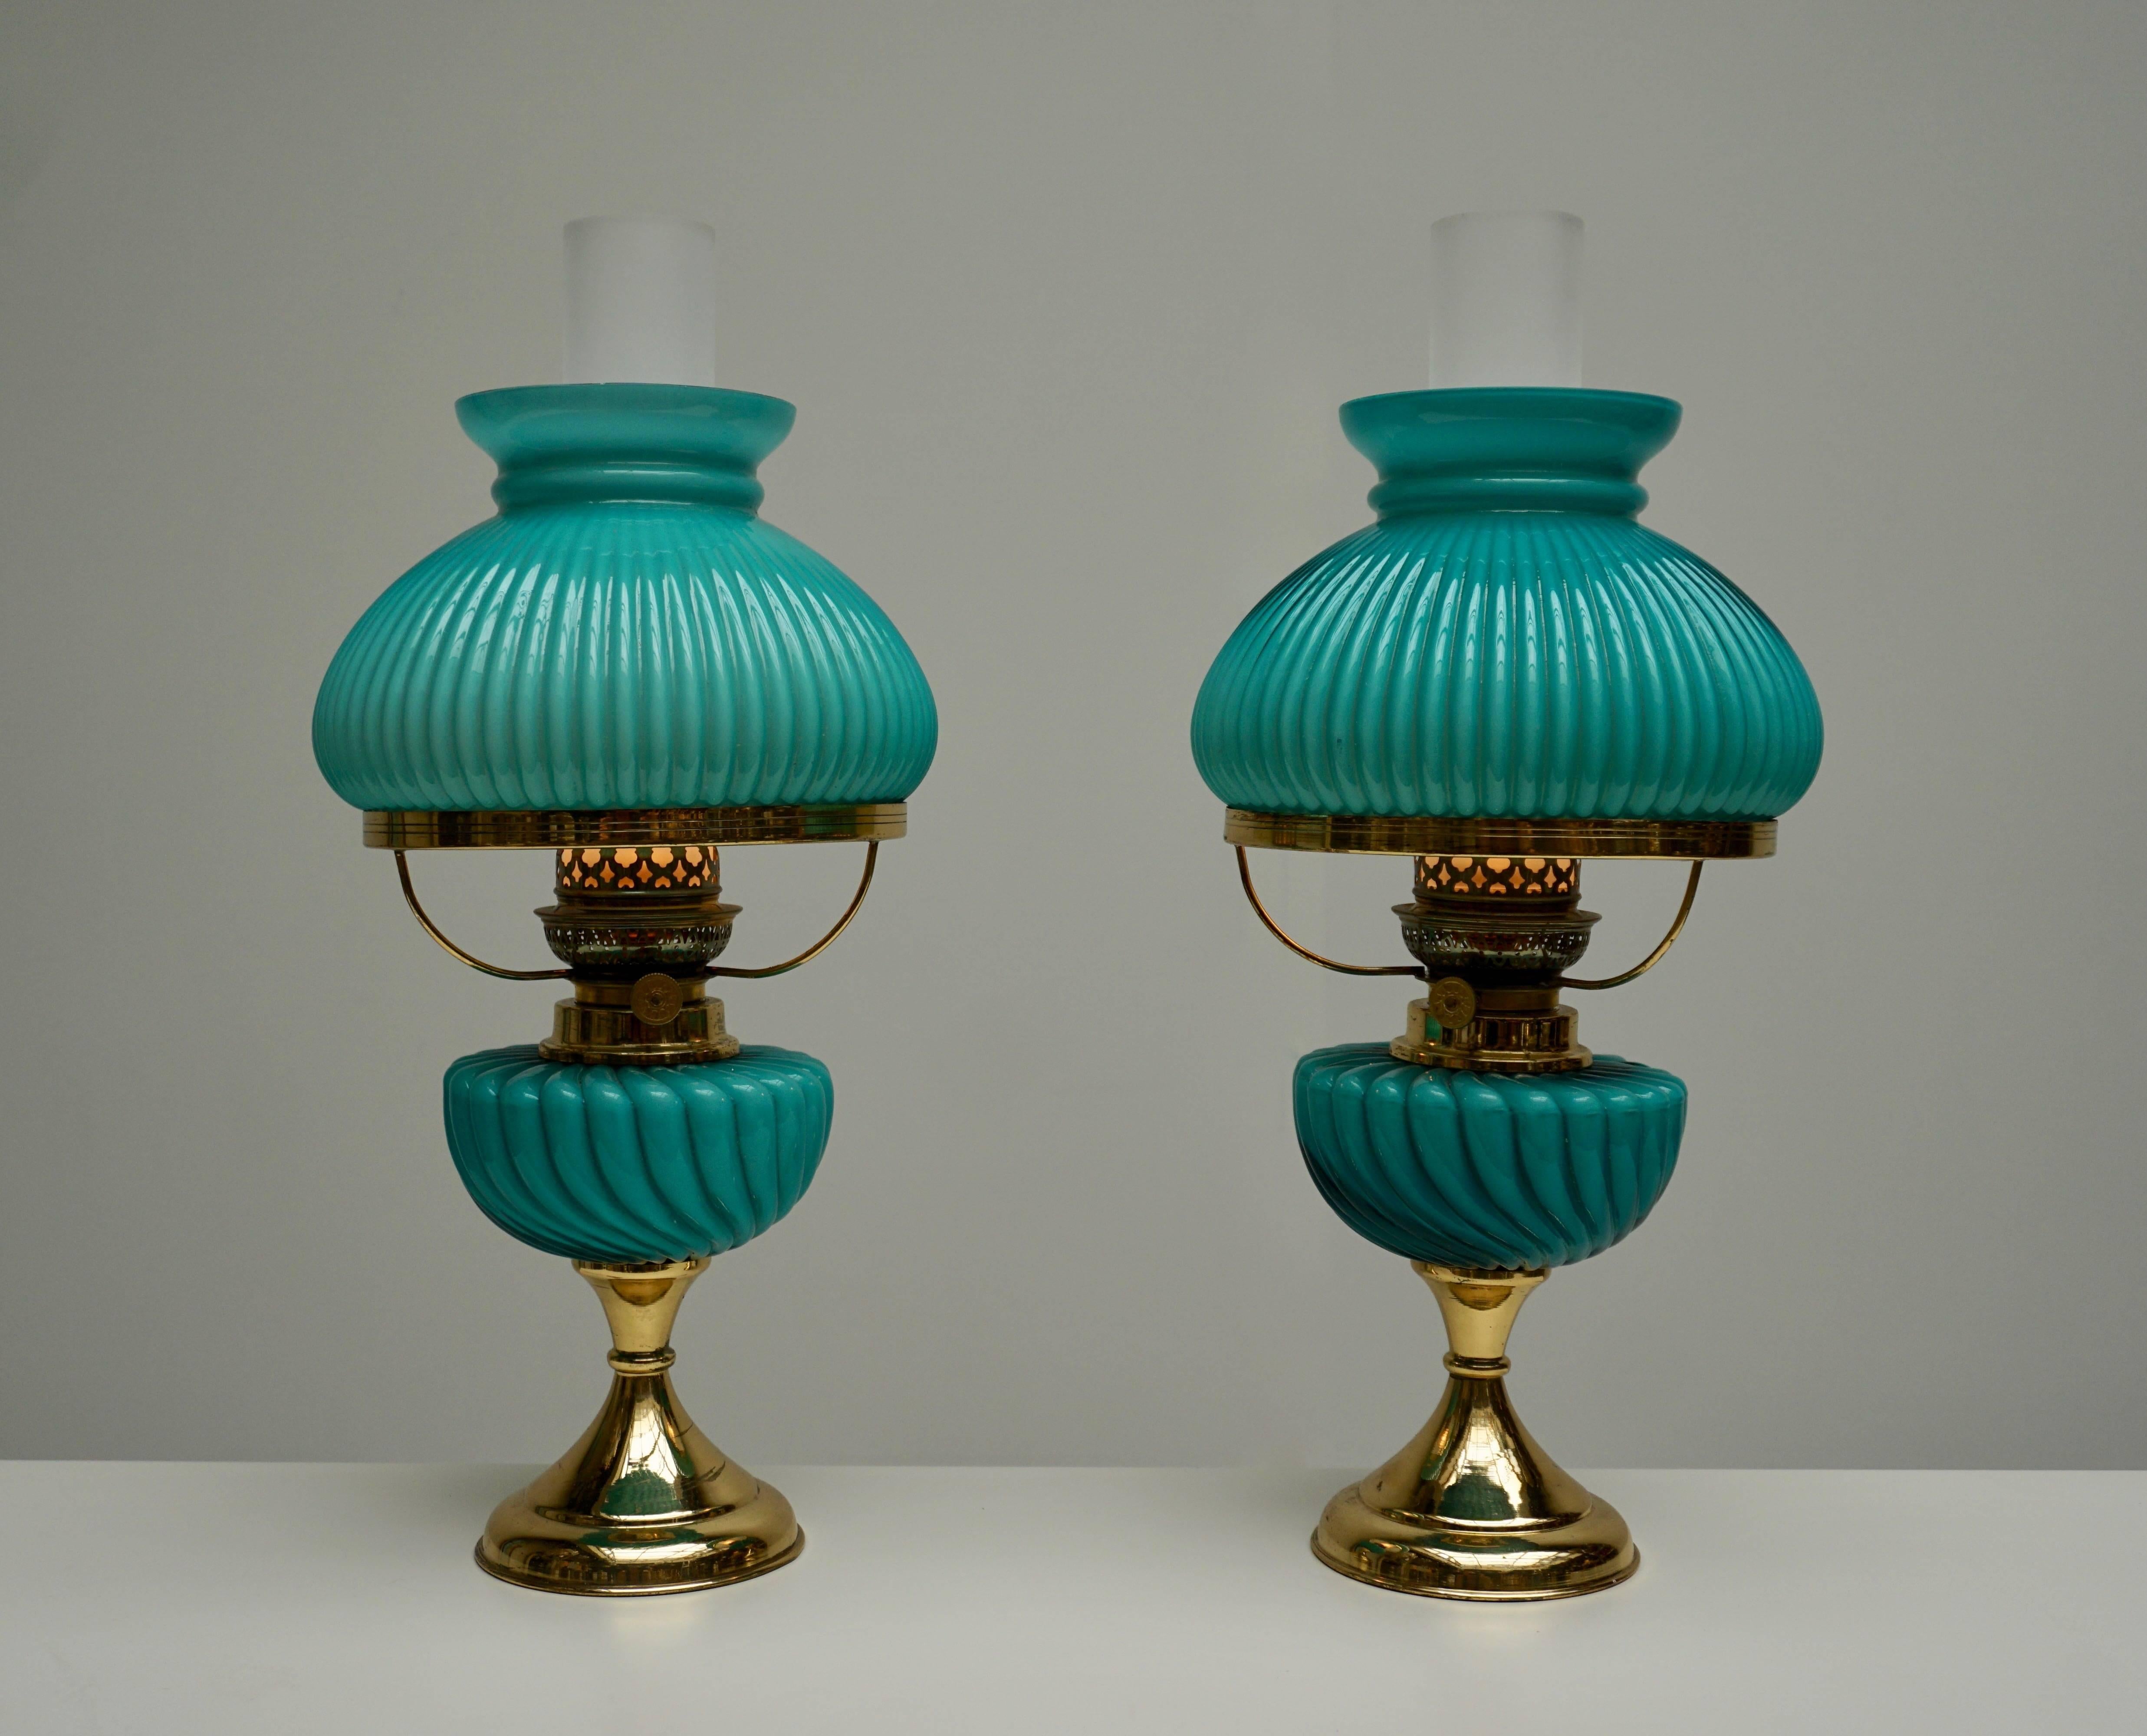 Two Italian Murano glass table lamps.
Measure: Diameter 20 cm.
Height blue glass shade 39 cm.
One E14 bulb.